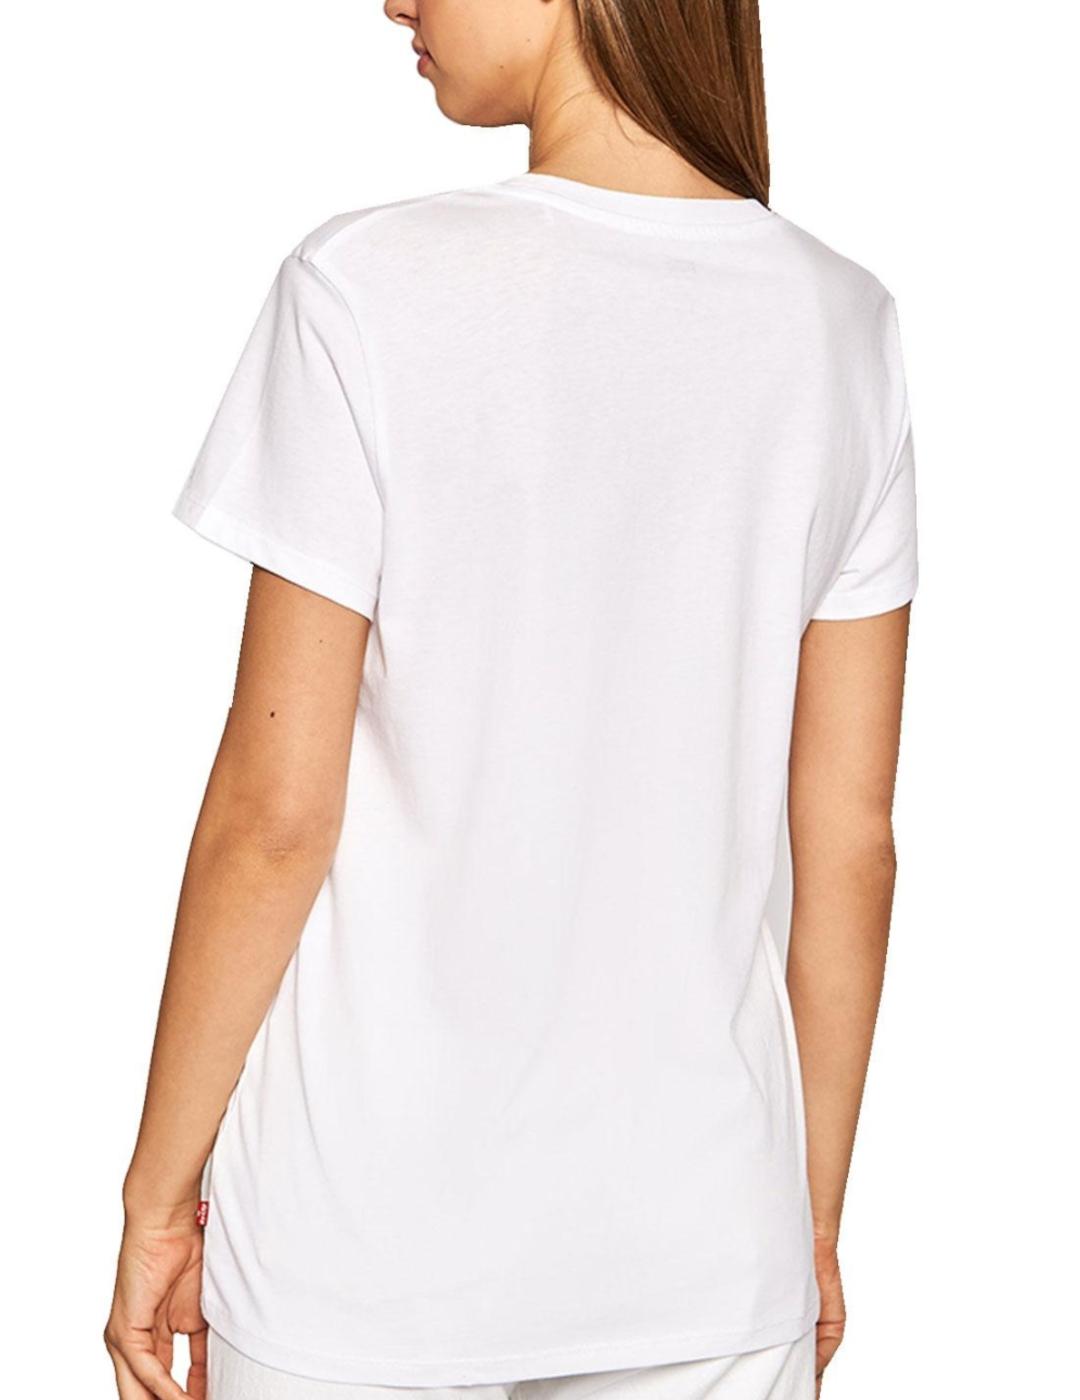 Camiseta Levis Vanessa Floral blanca para mujer -z